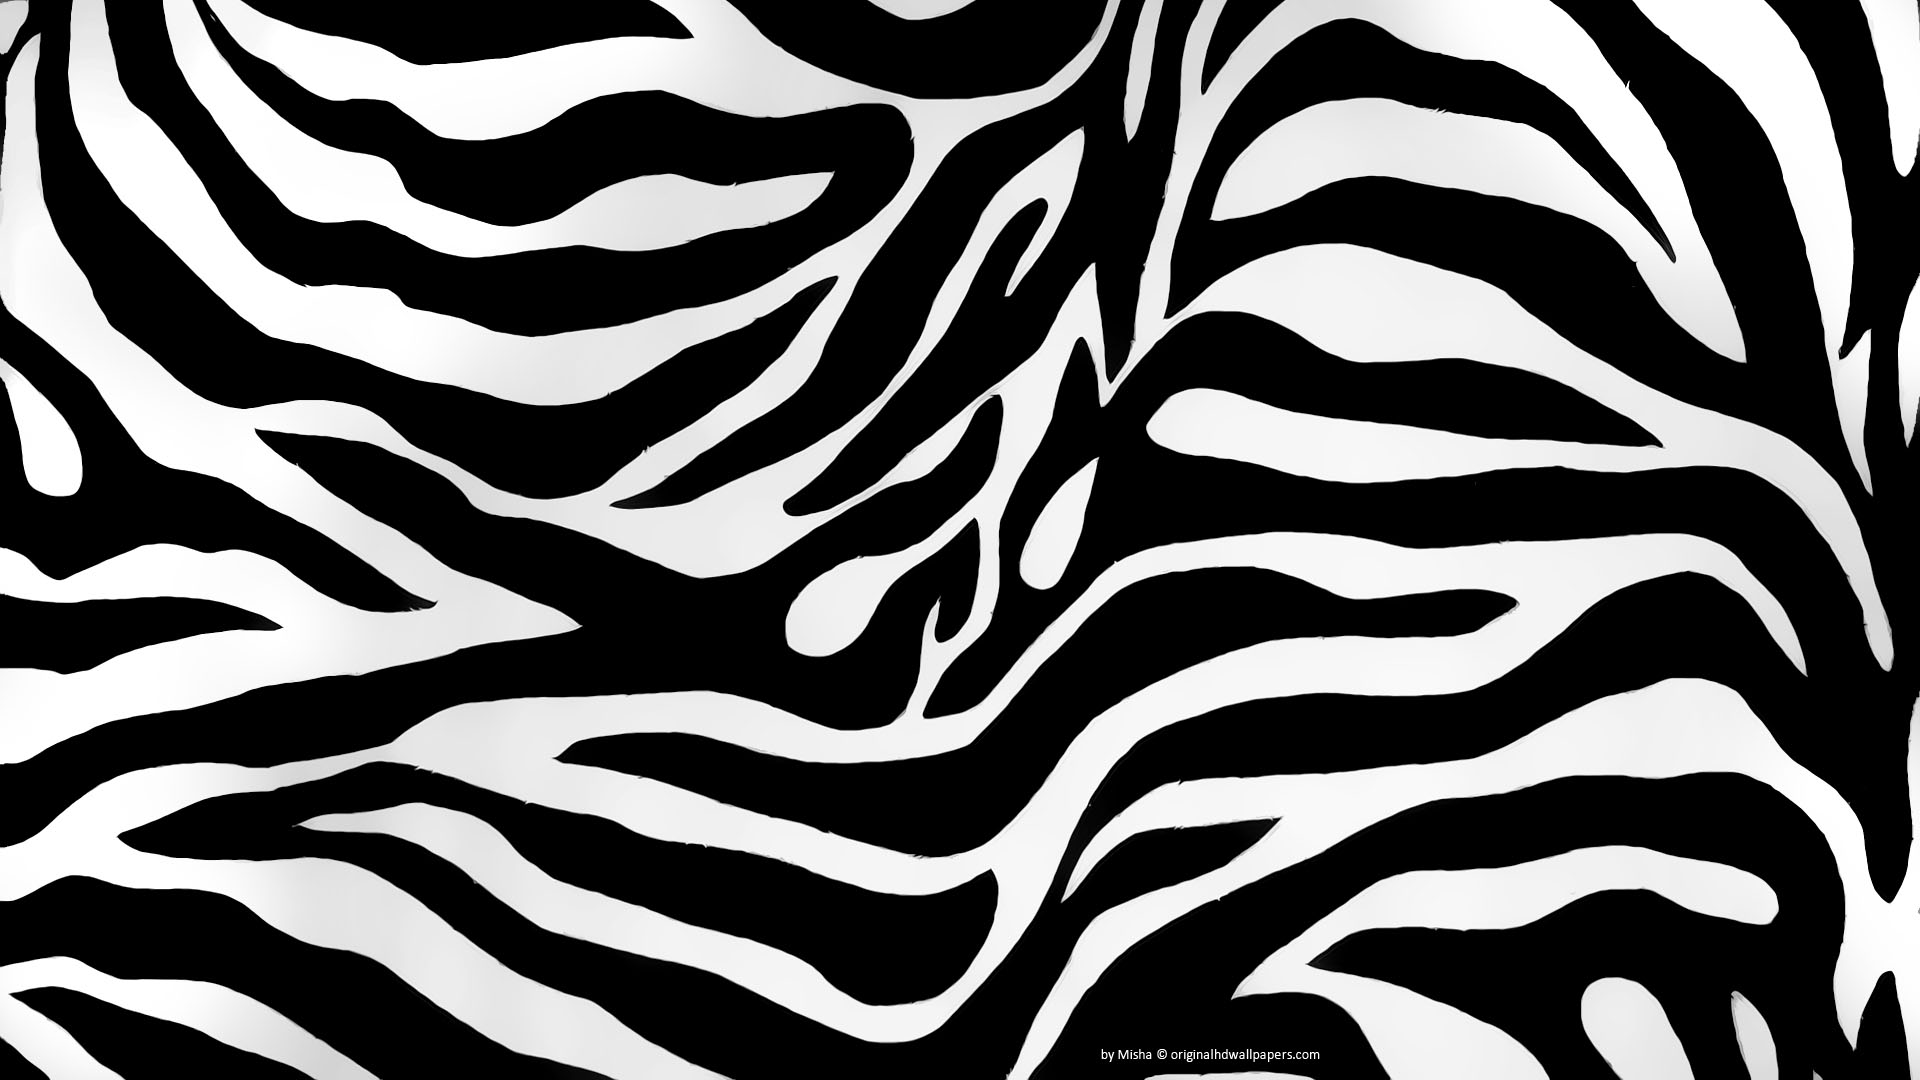 Zebra abstract wallpaper | Wallpup.com